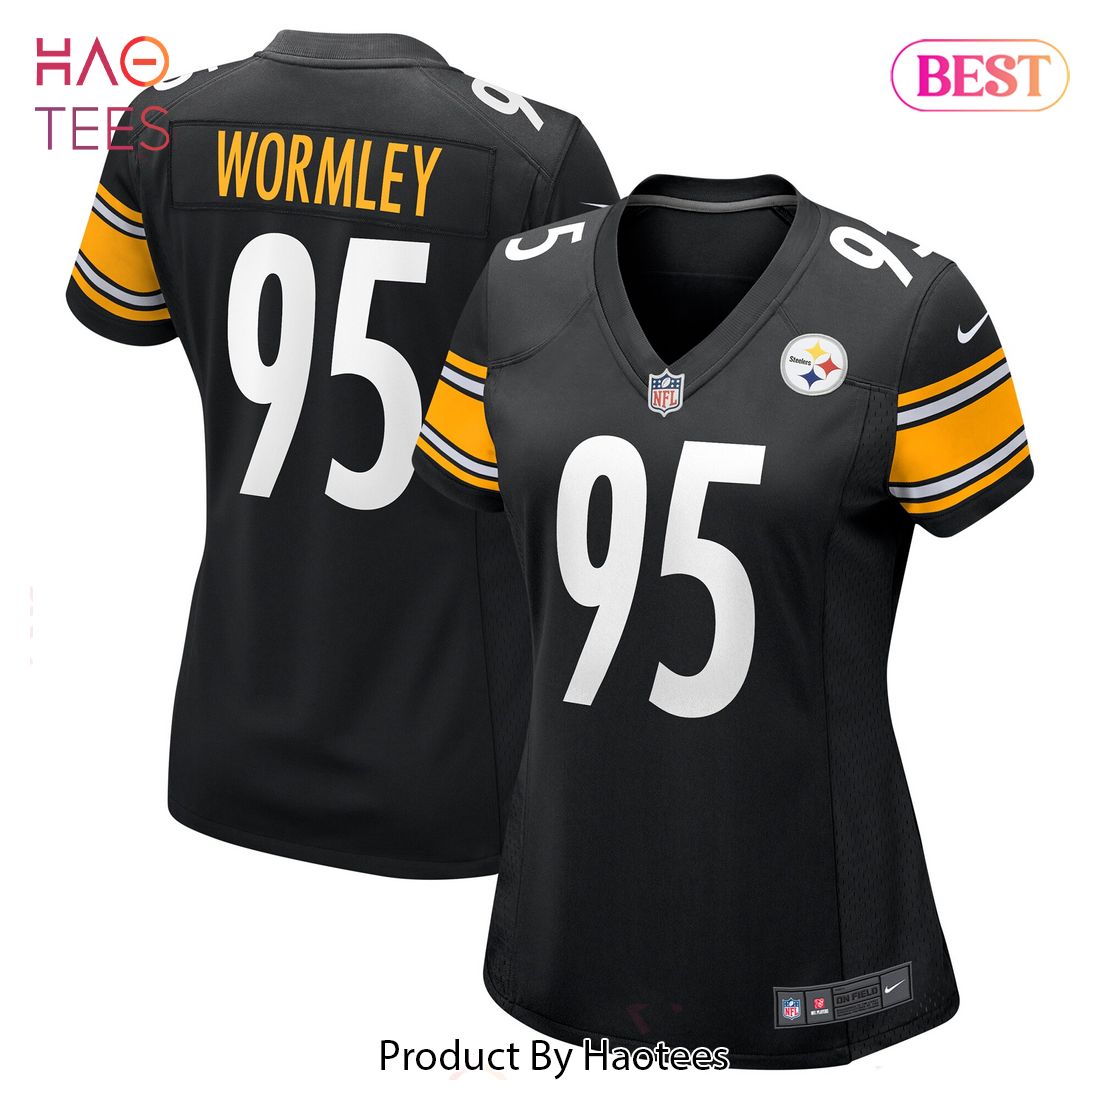 Chris Wormley Pittsburgh Steelers Nike Women’s Game Jersey Black